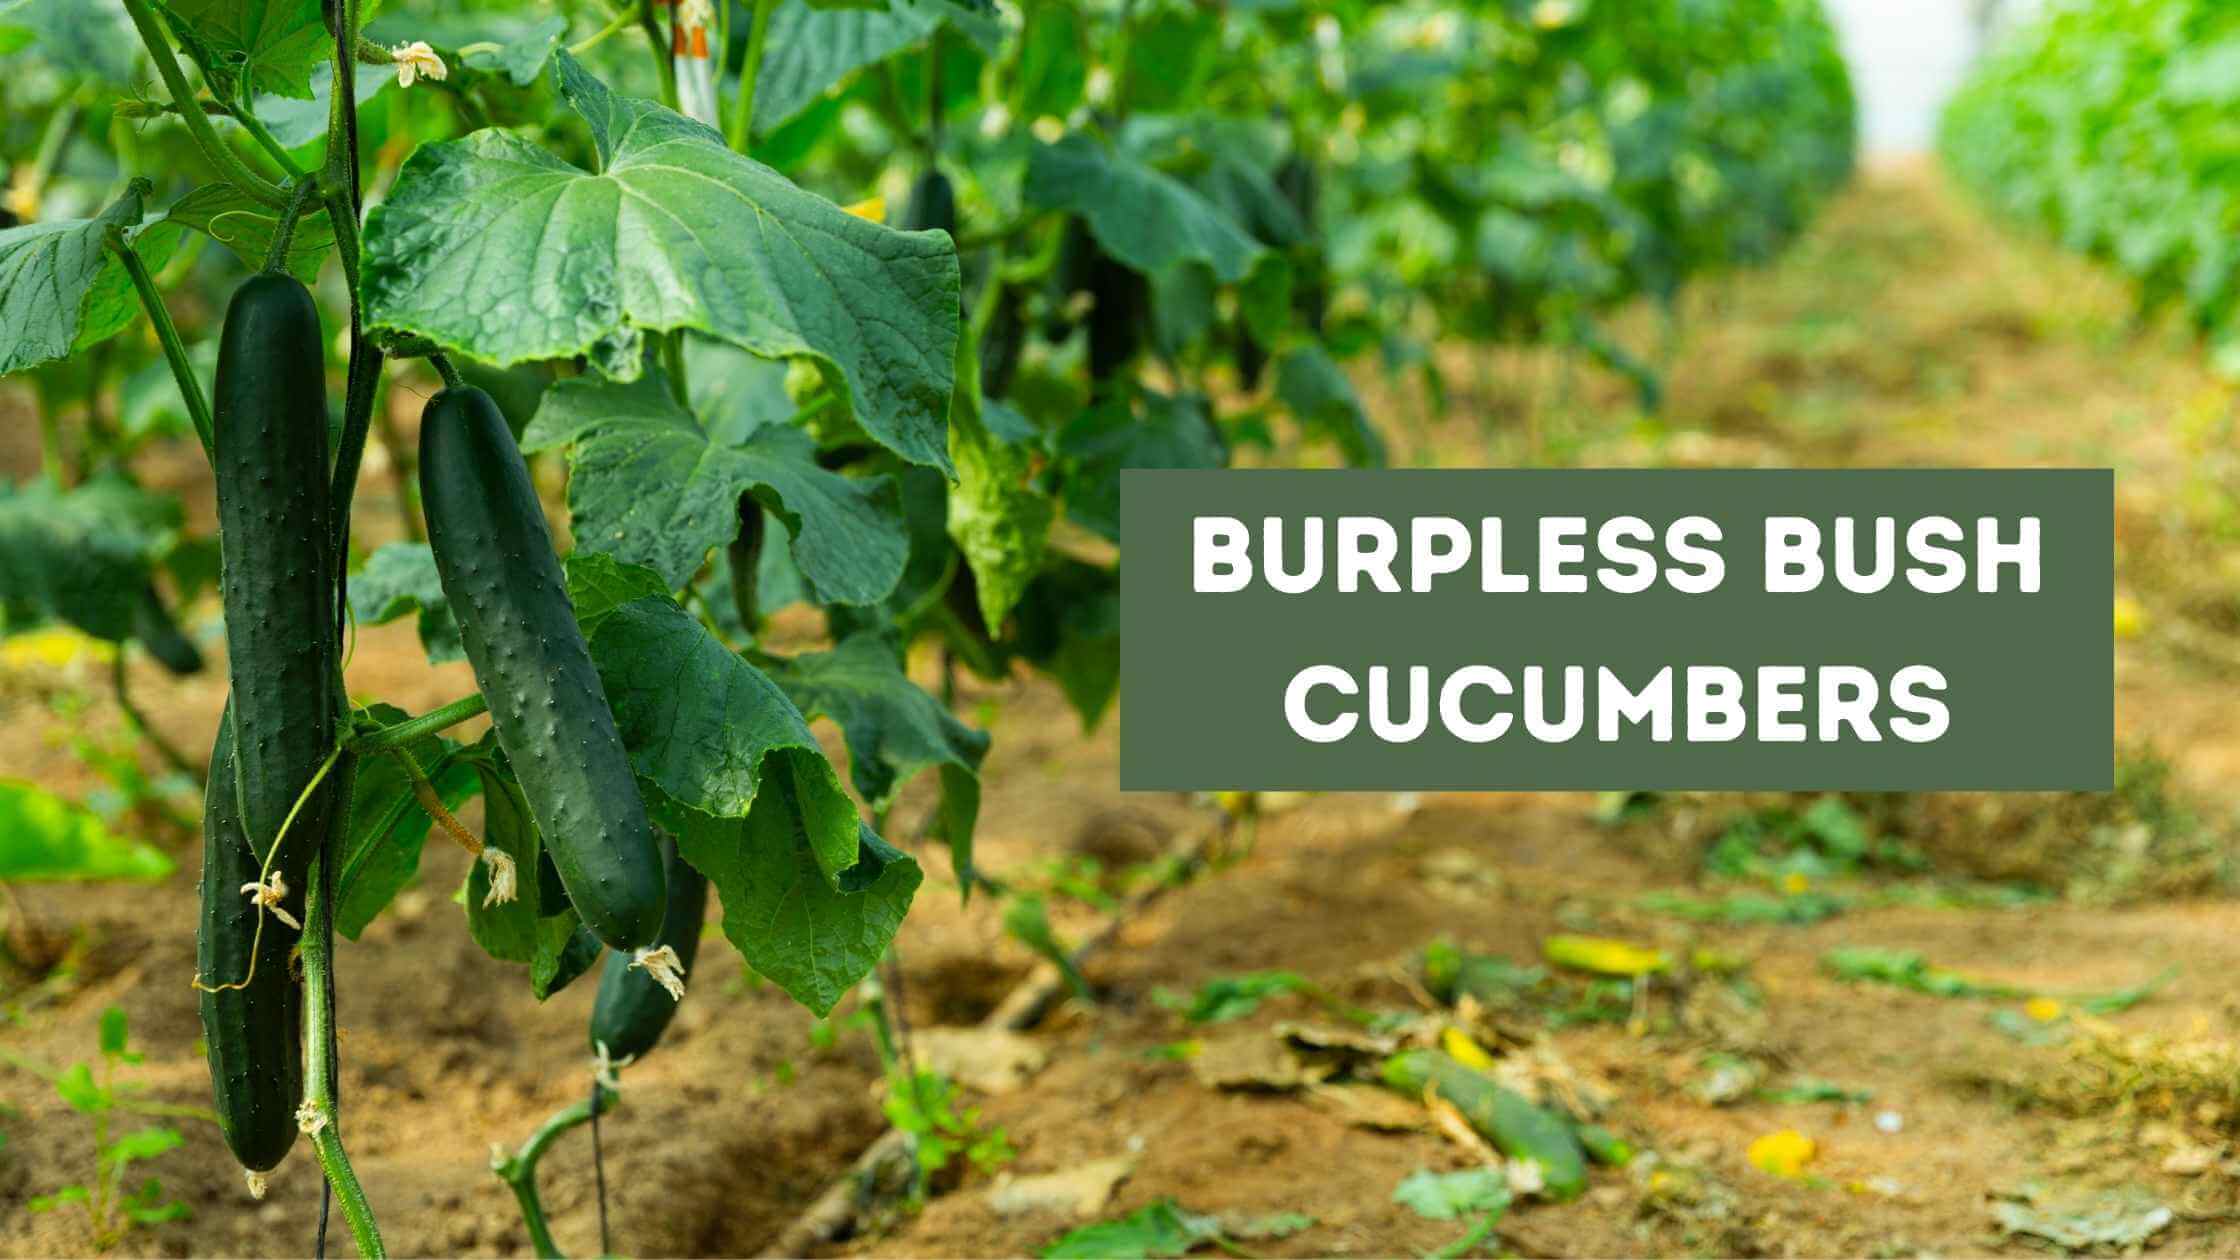 Burpless Bush Cucumbers